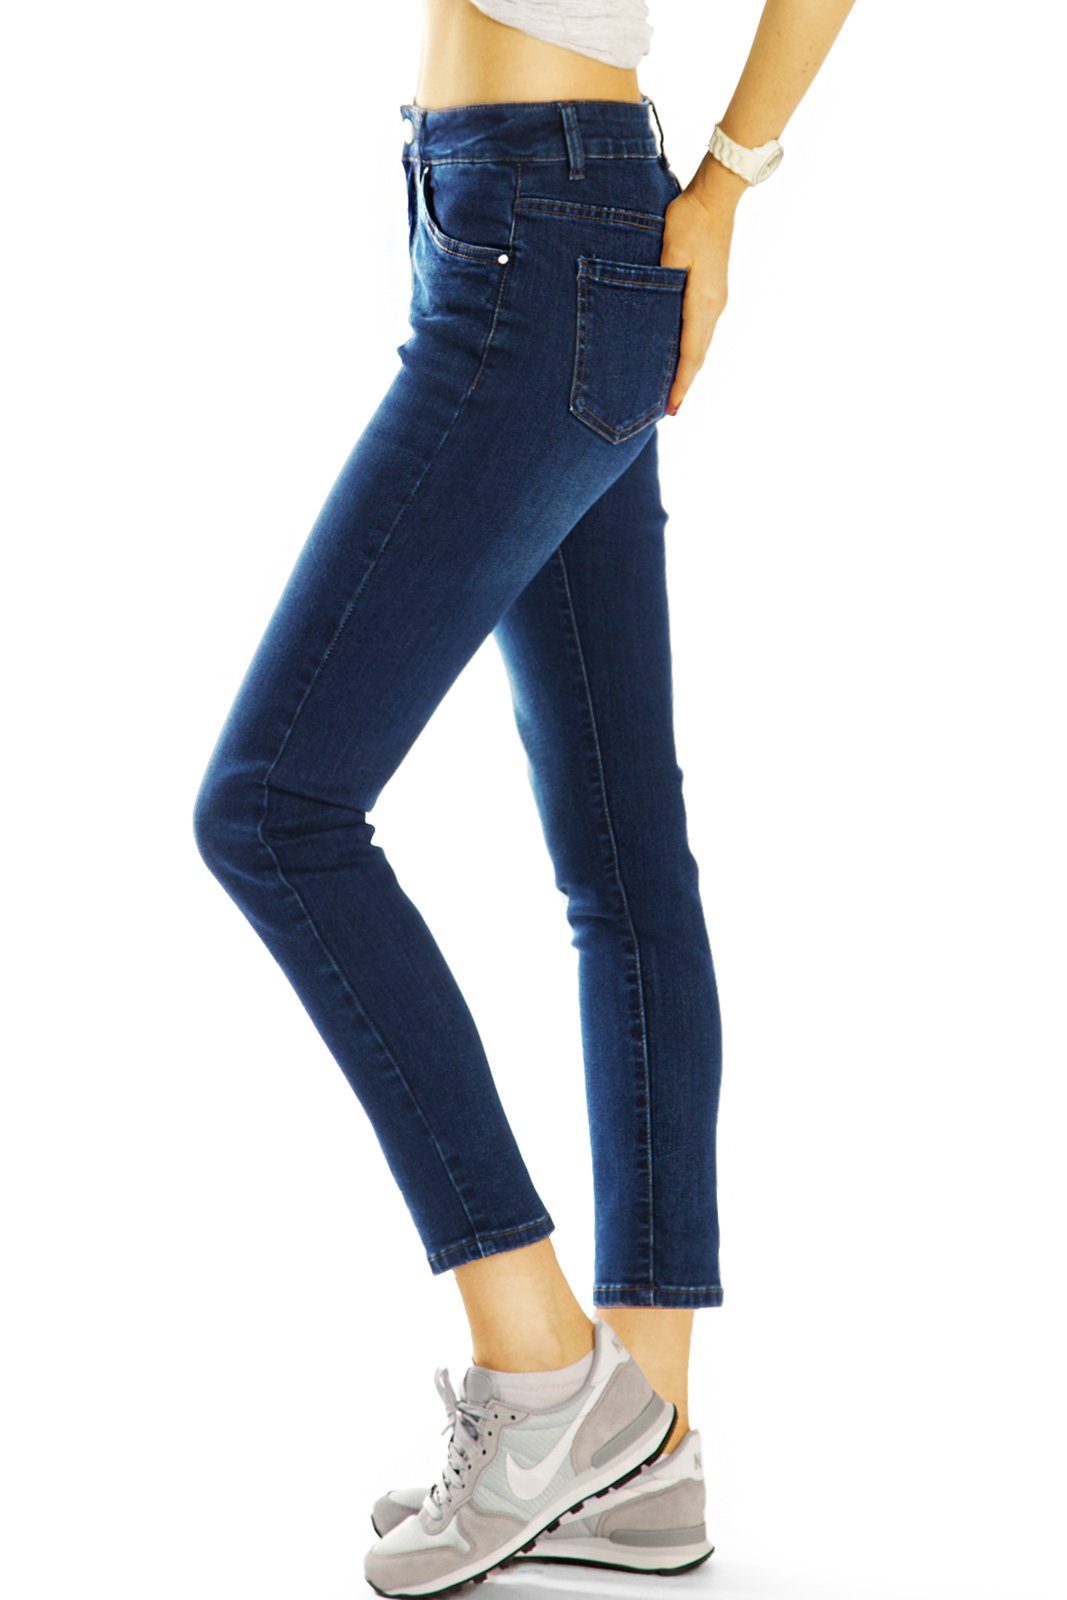 be styled j3m dunkelblaue waist Damenjeans, röhrige 7/8-Jeans mid Hosen